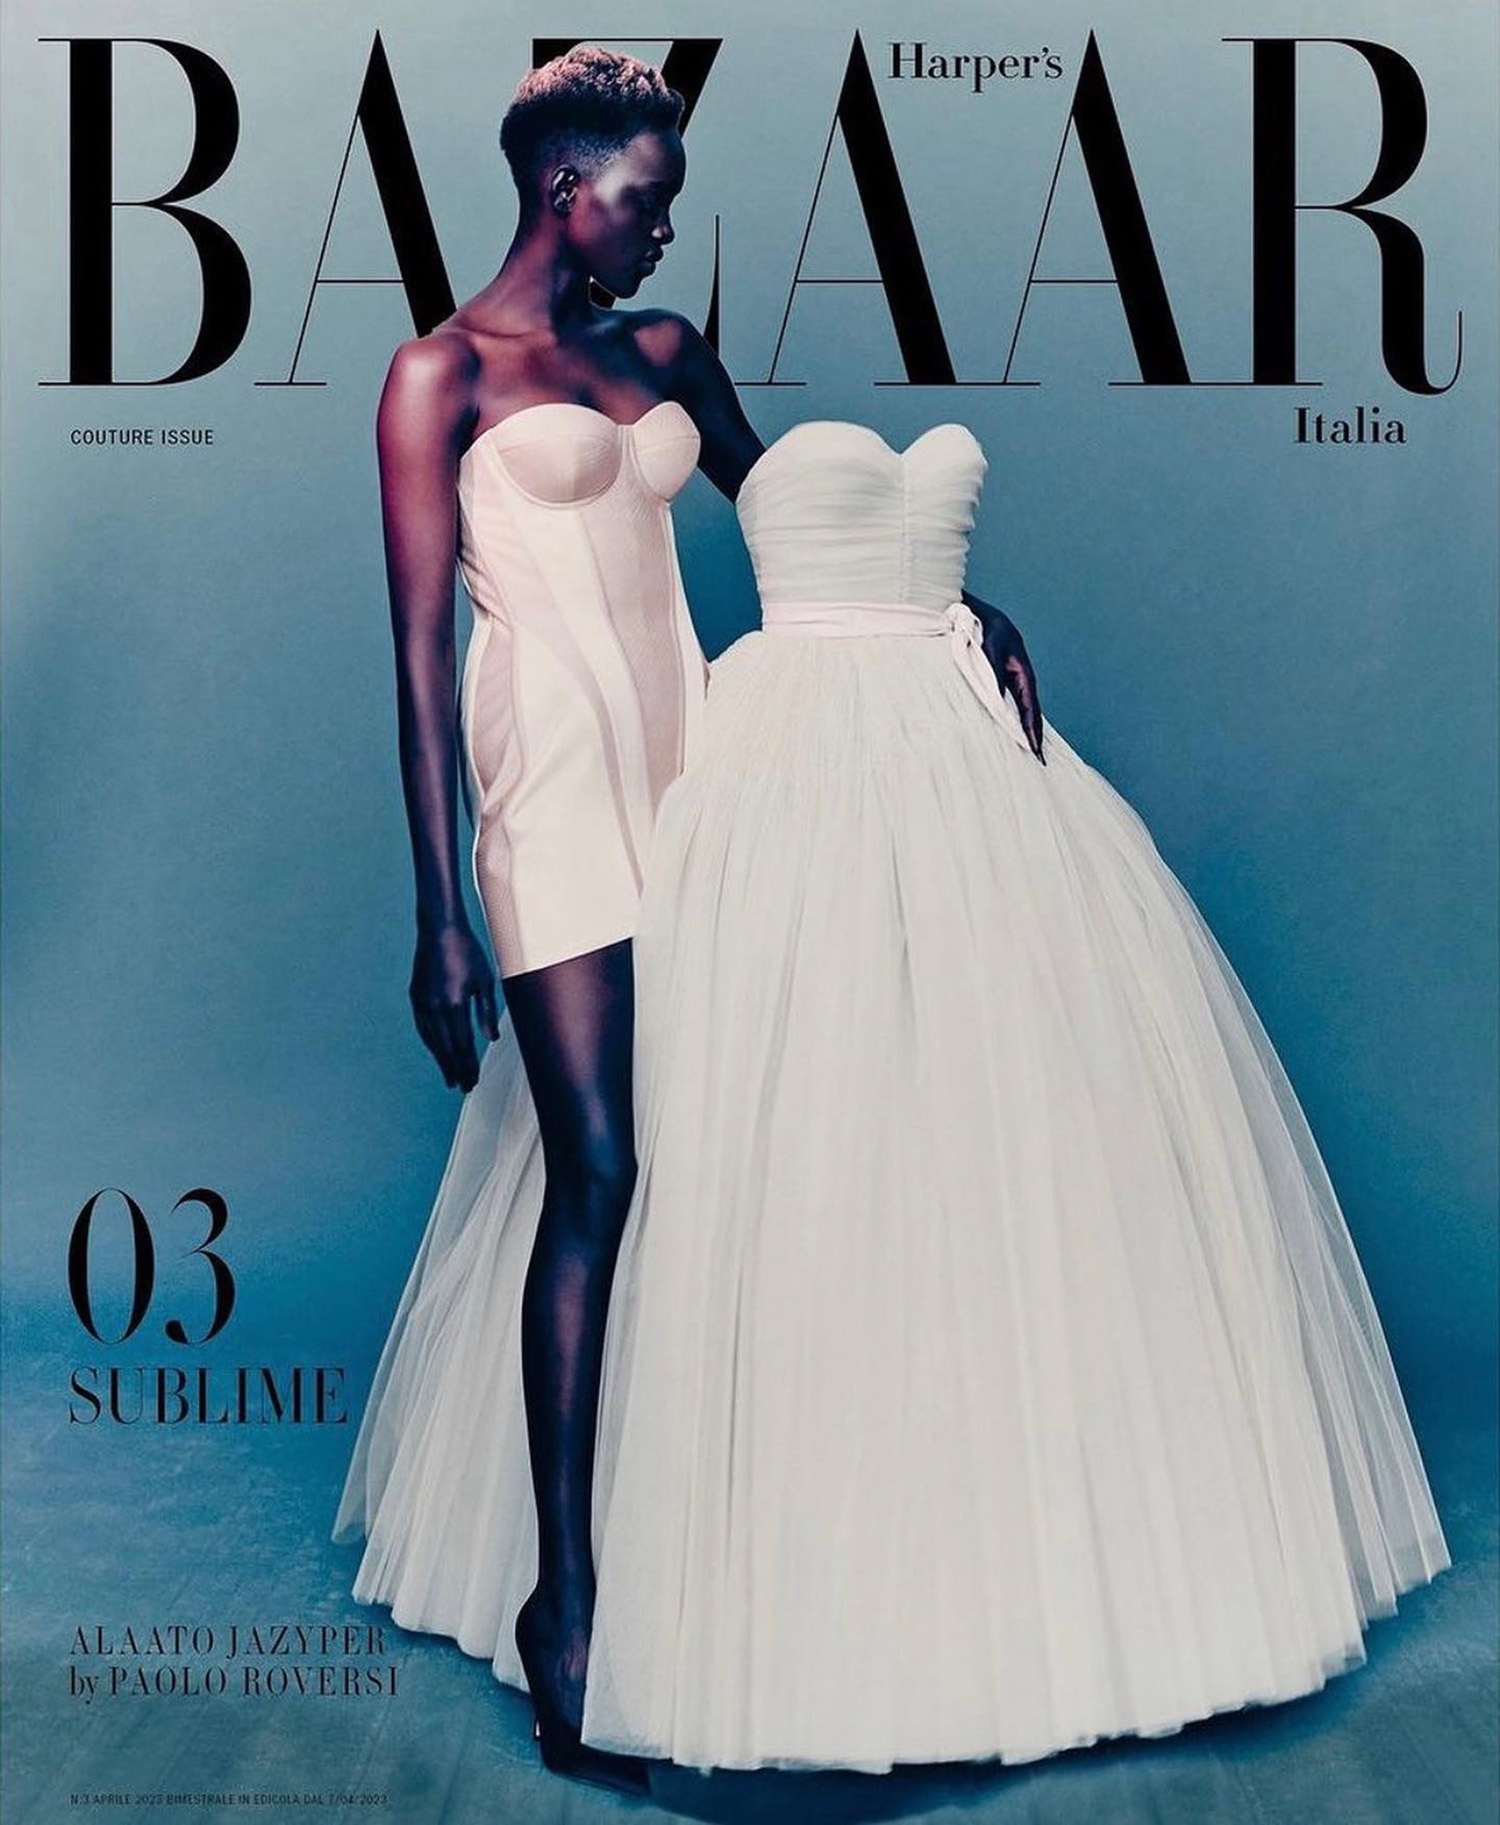 fashionotography by Harper\'s Bazaar Alaato Michael Jazyper covers 2023 Paolo - Roversi April/May Italia